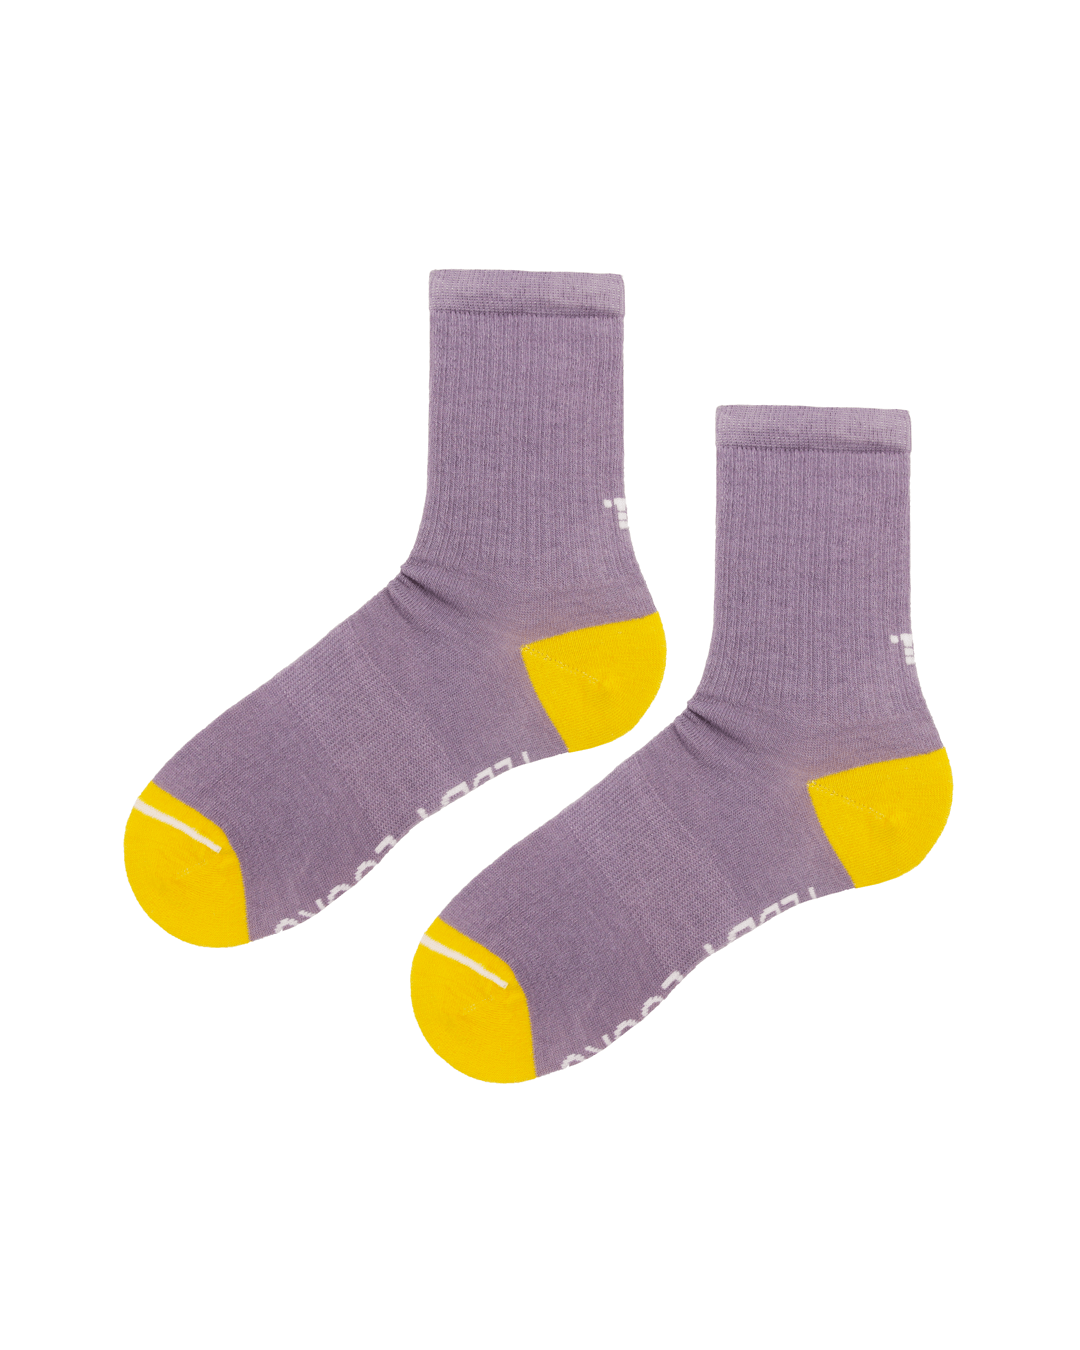 Colorful sustainable socks. Colourful sports socks